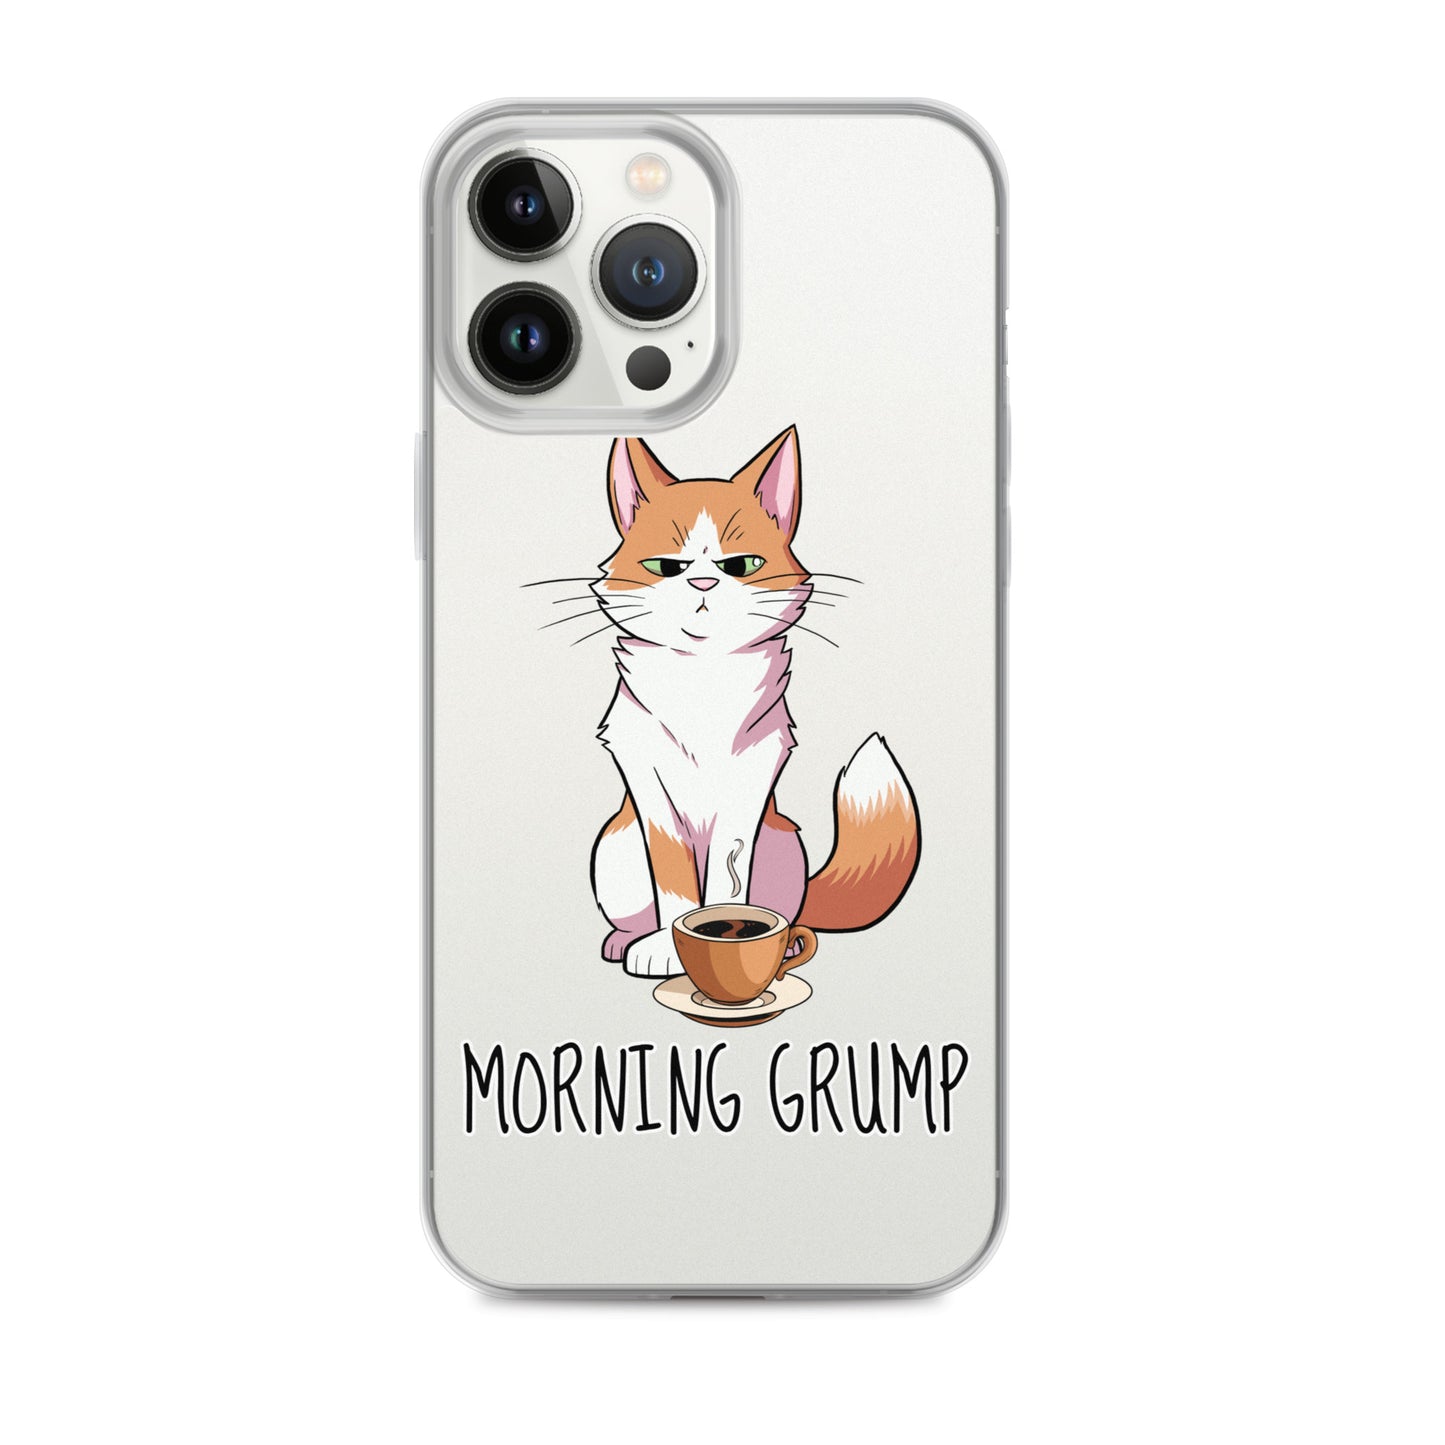 Morning Grump iPhone Case